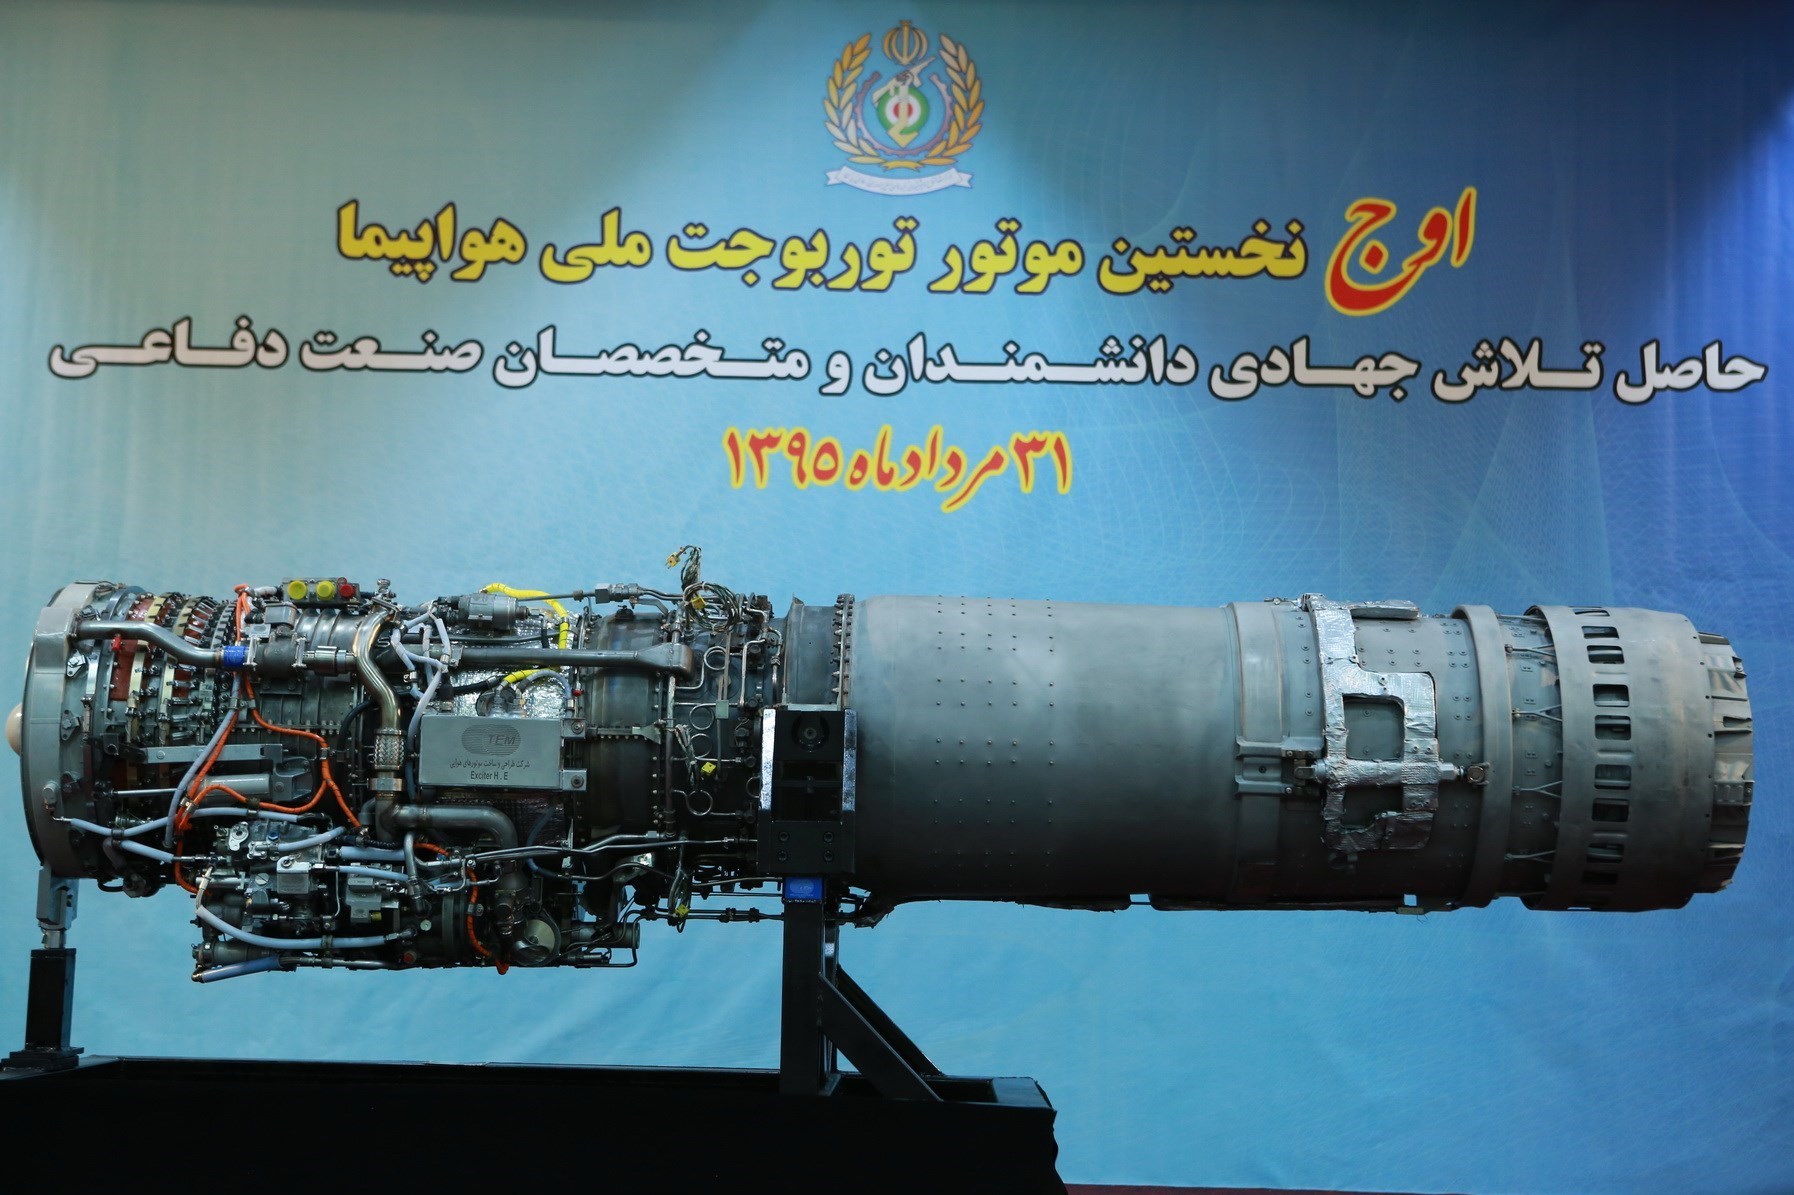 مشخصات اولین موتور ملی توربوجت ایرانی + تصاویر